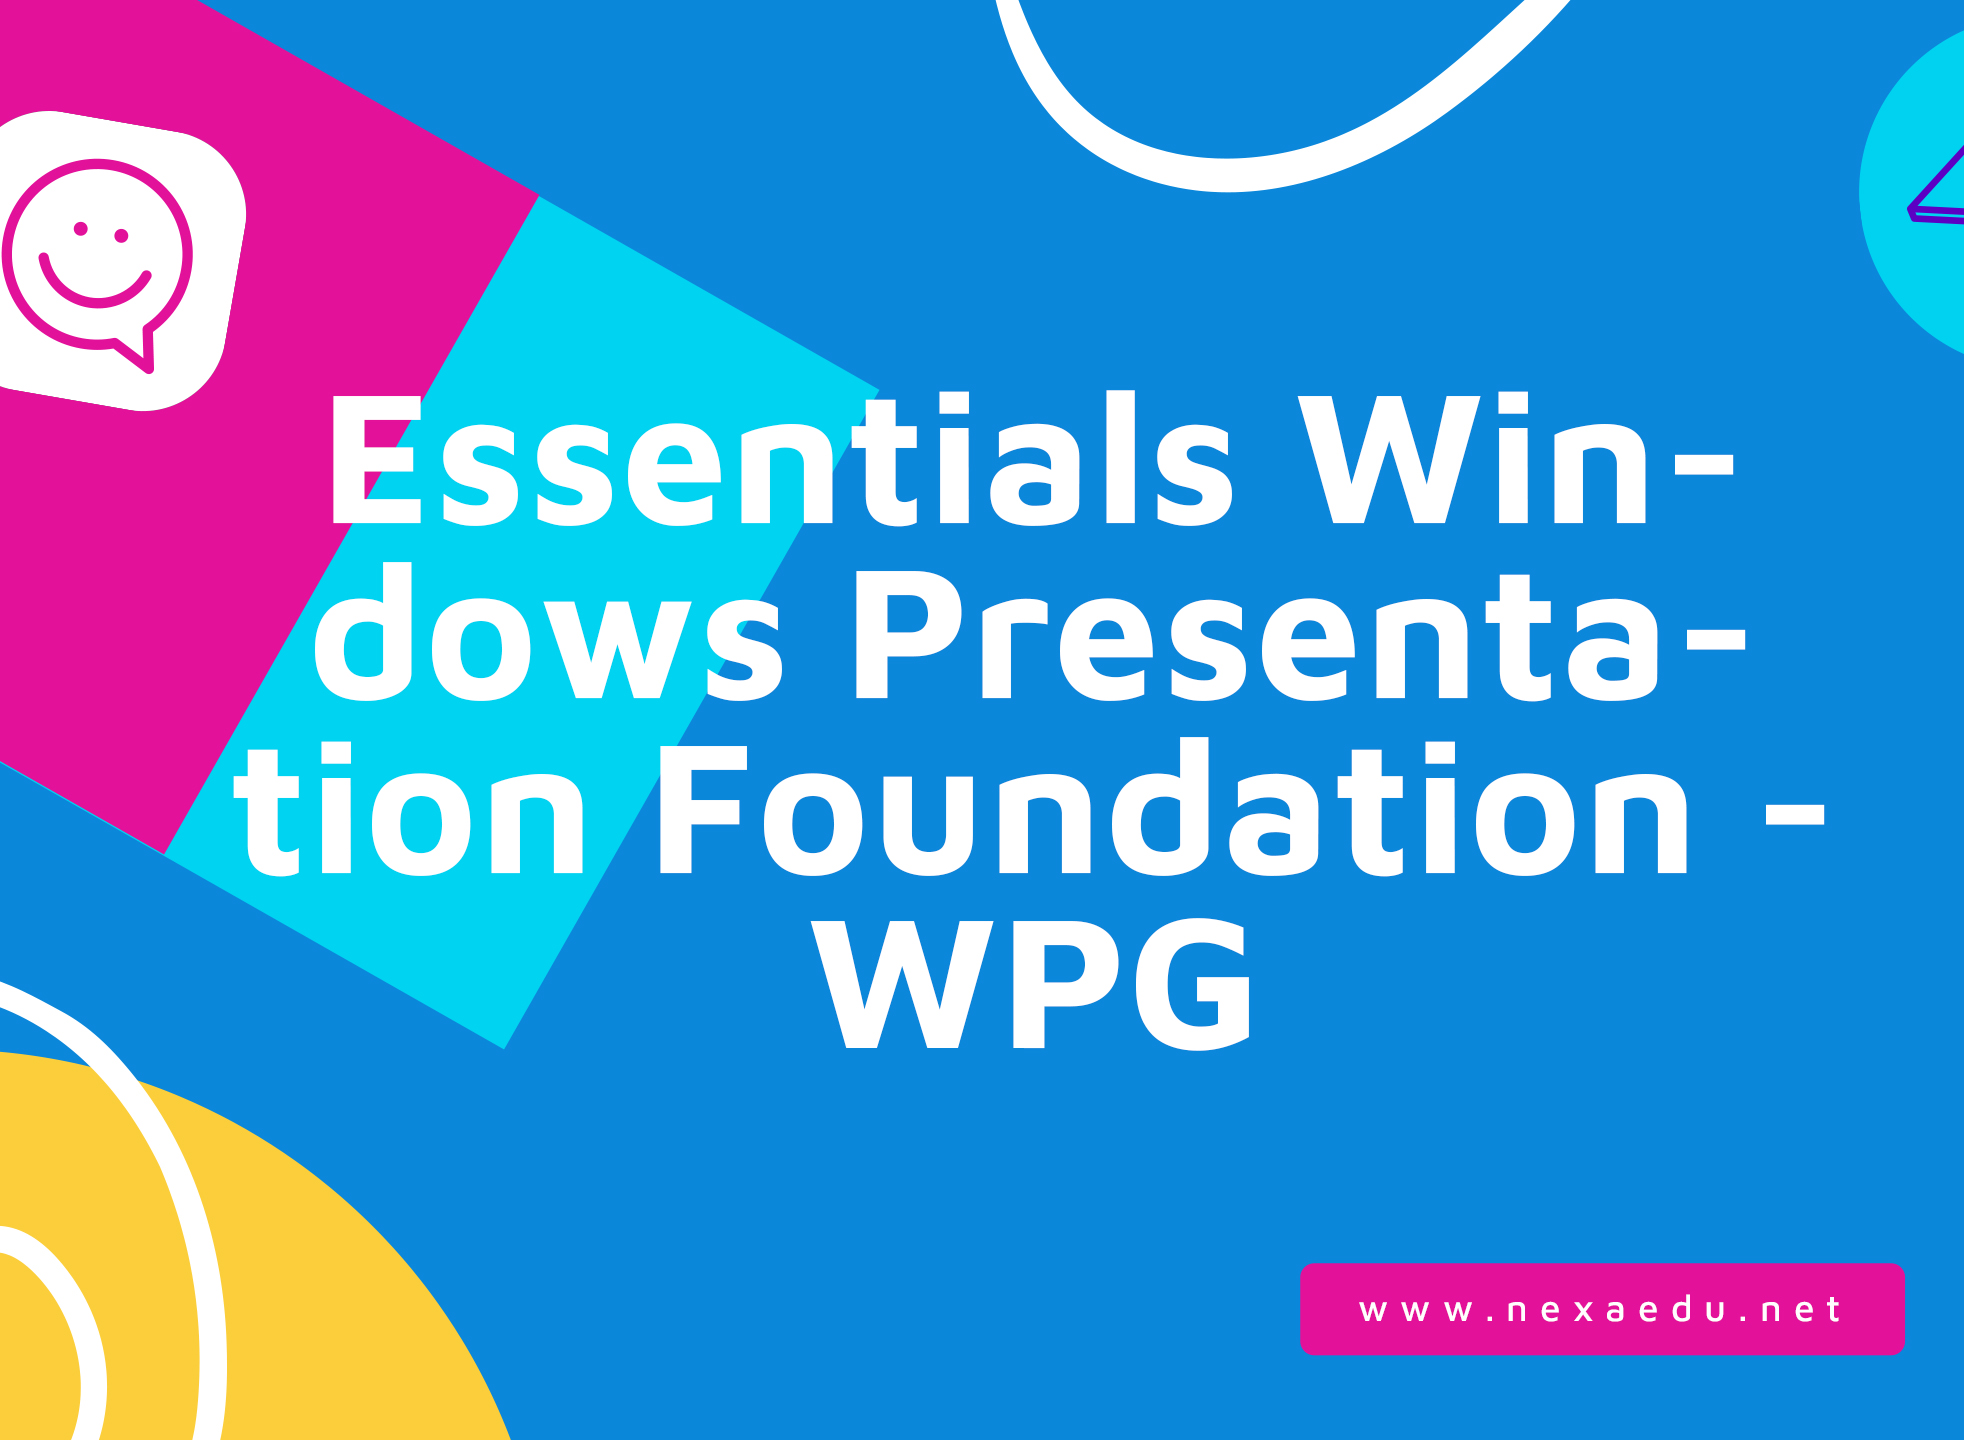 Essentials Windows Presentation Foundation - WPG